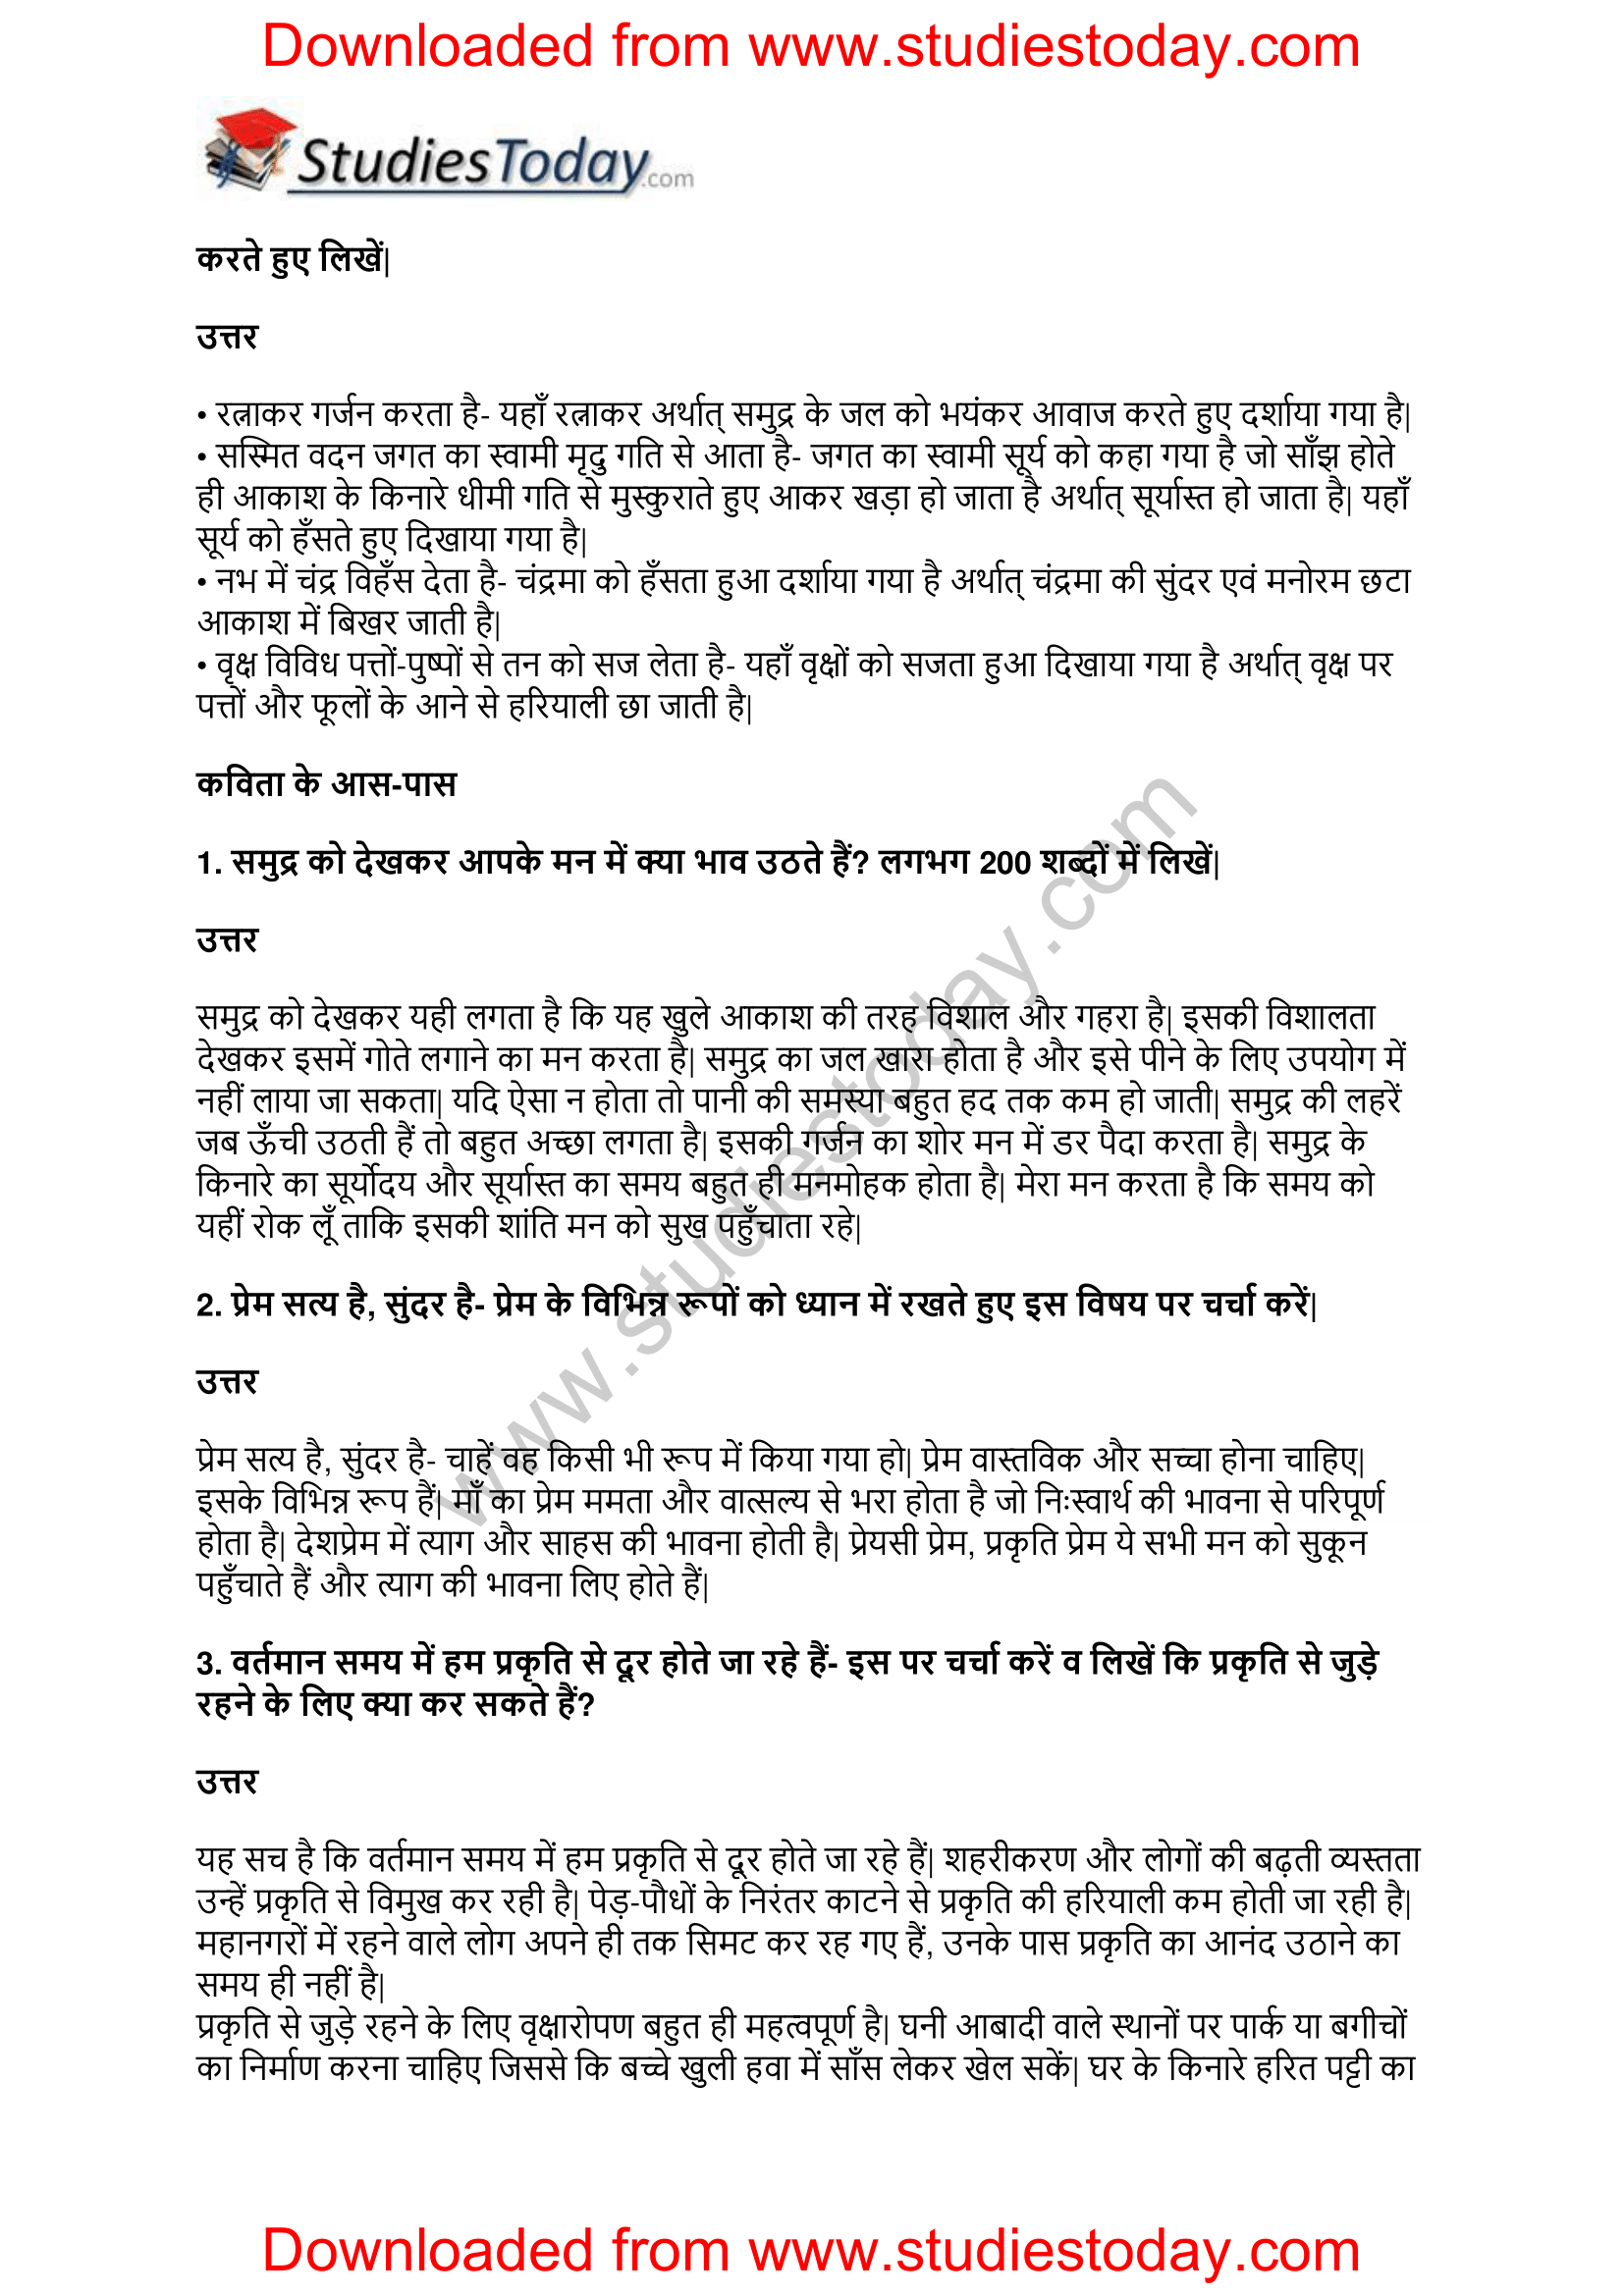 NCERT-Solutions-Class-11-Hindi-Aroh-Poem-Ramniwas-Tripathi-2